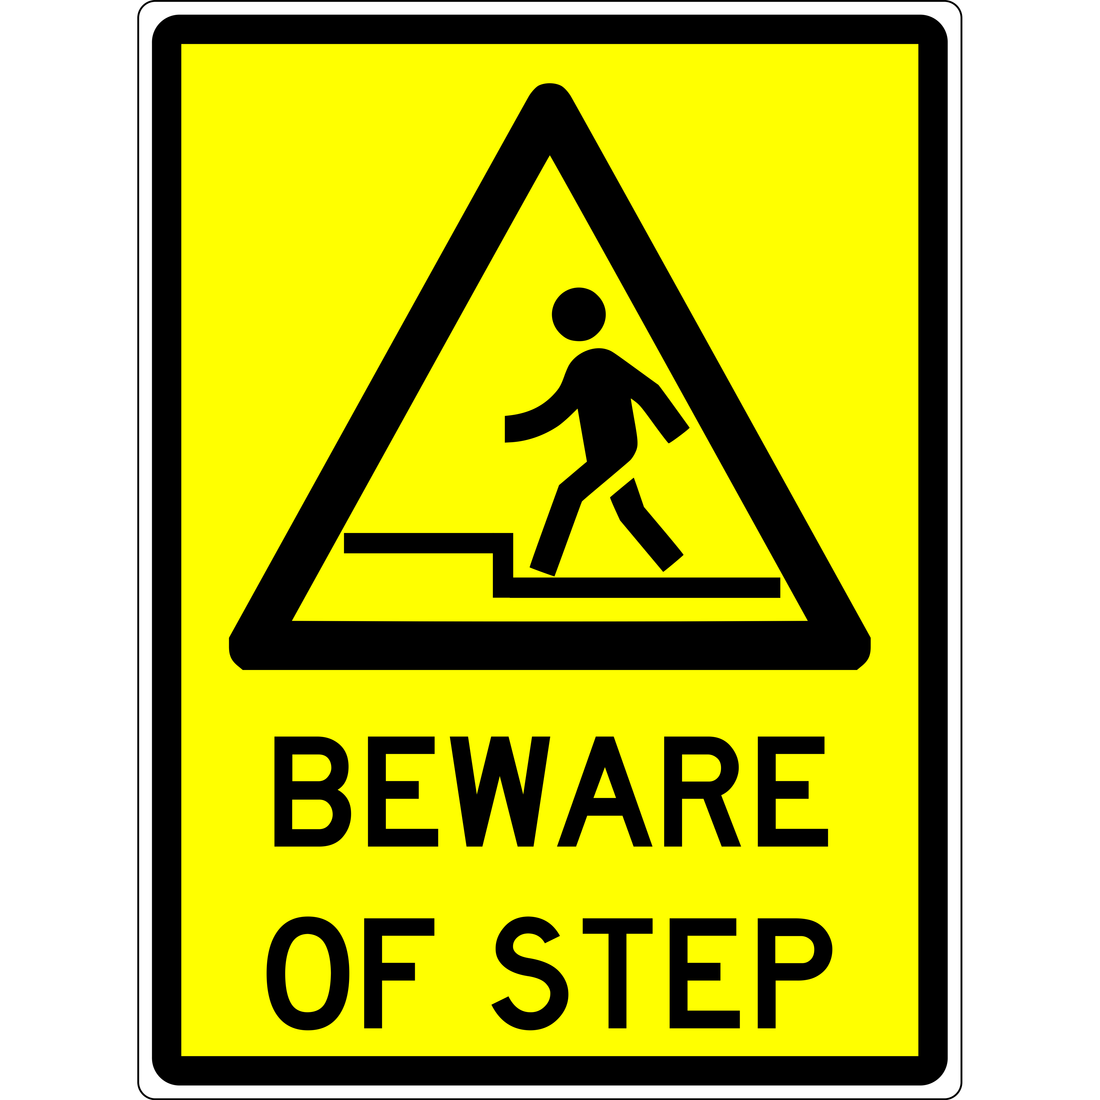 WARNING - BEWARE OF STEP